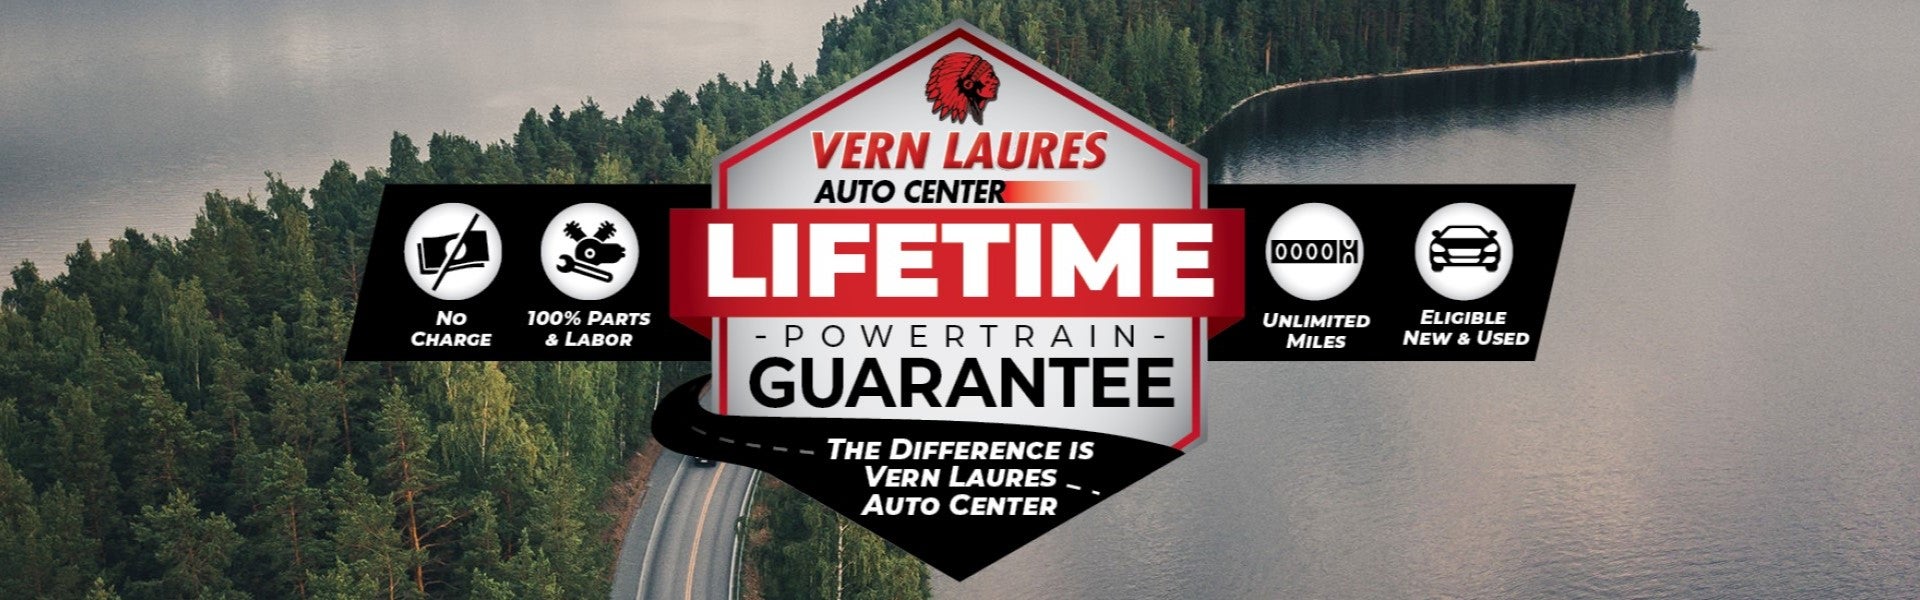 Vern Laures Lifetime Powertrain Guarantee